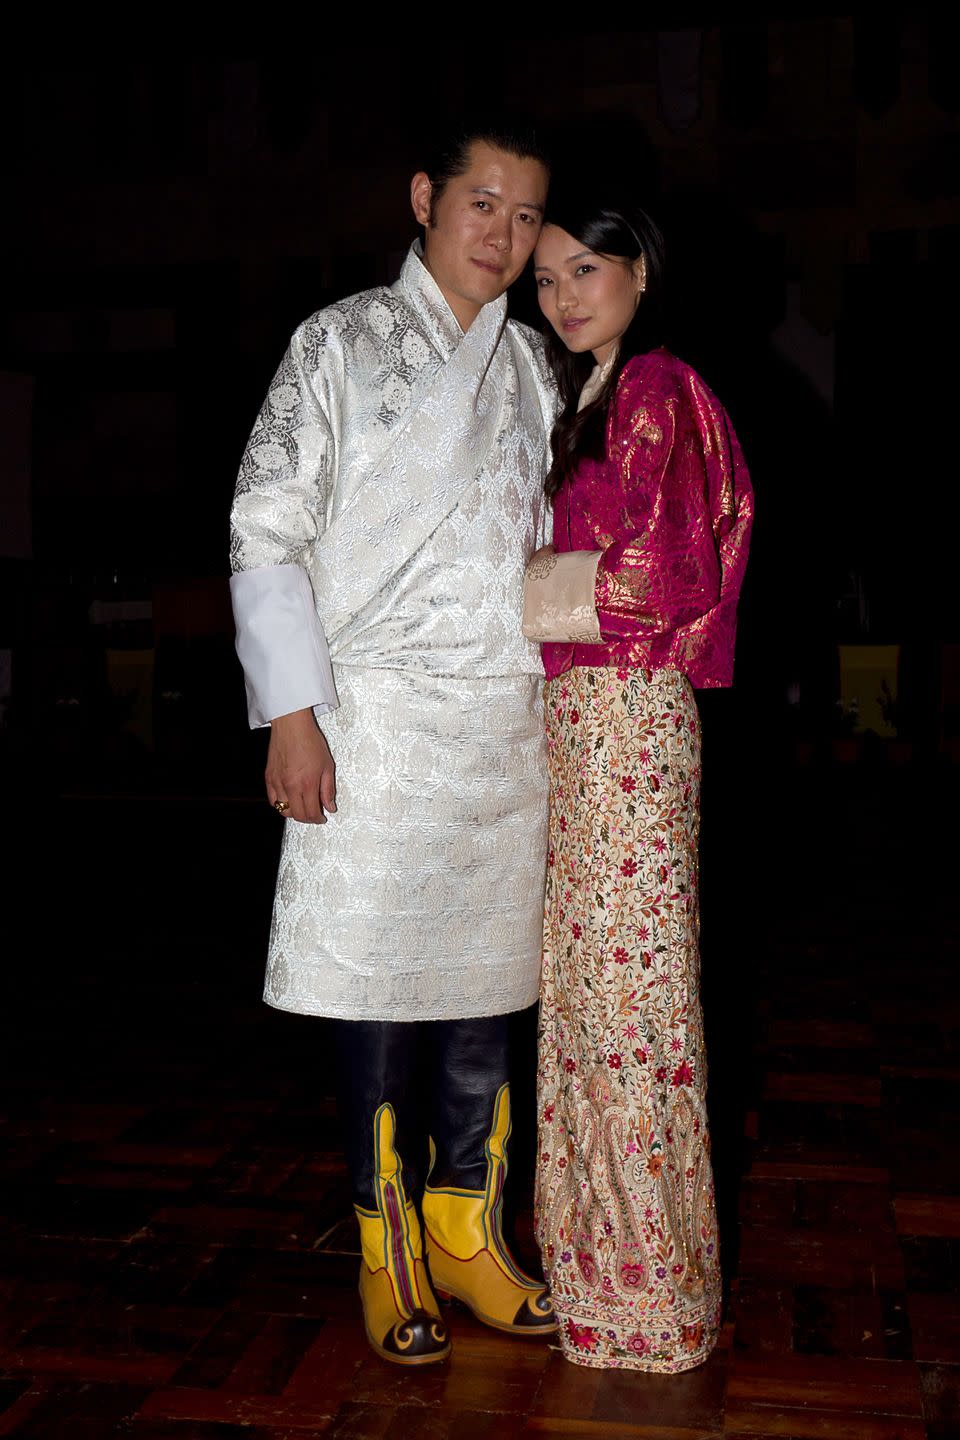 bhutan prepares for royal wedding